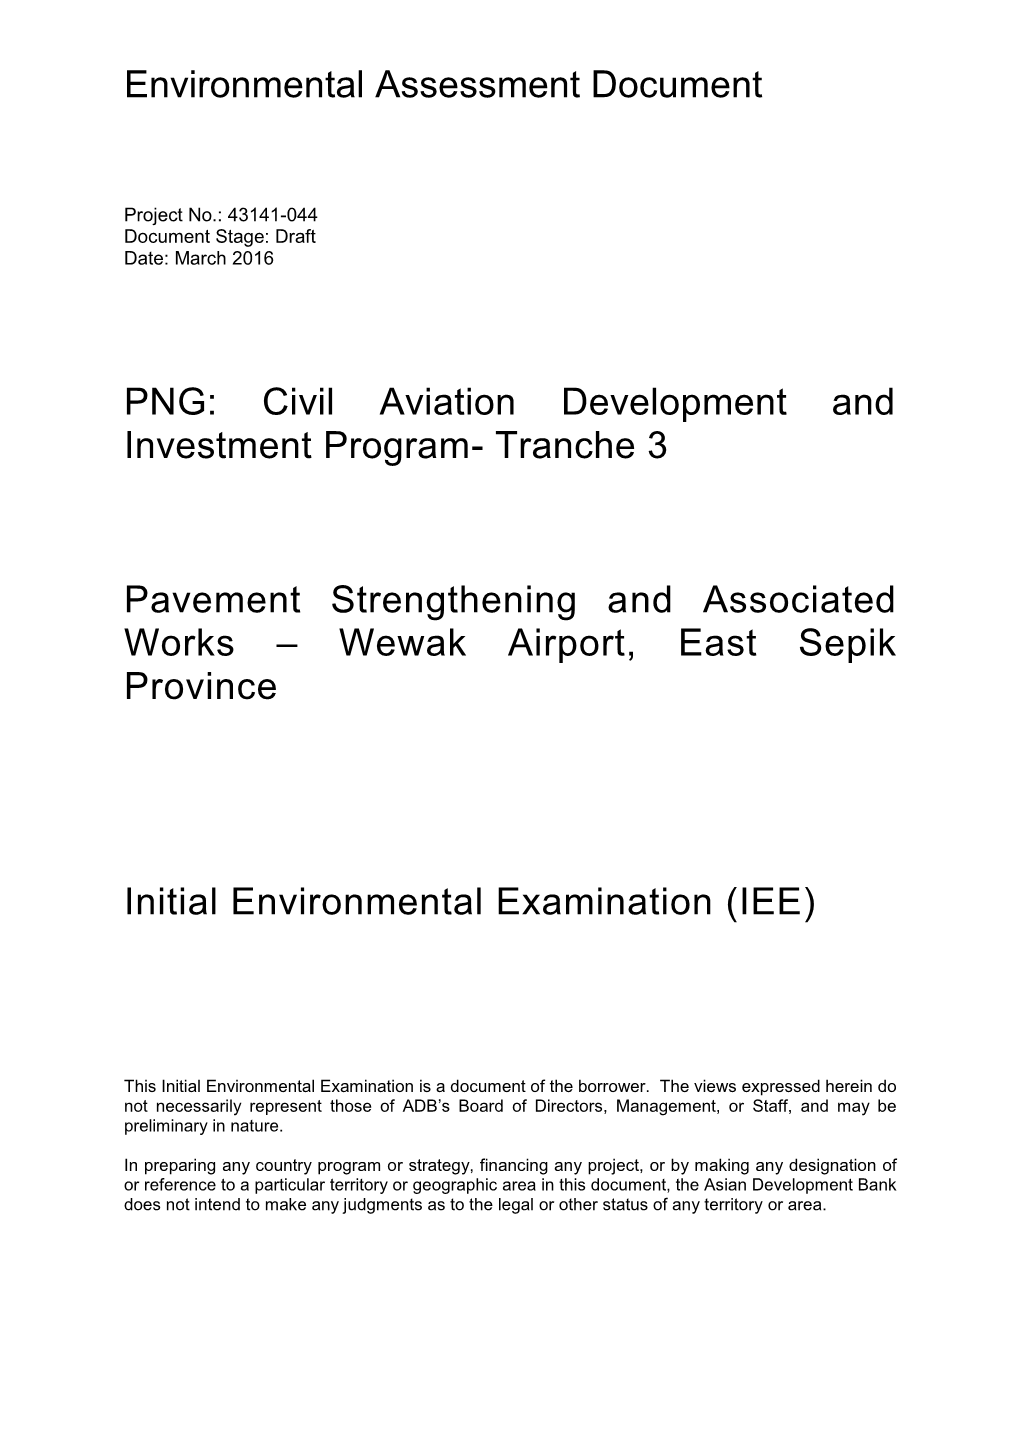 Environmental Assessment Document PNG: Civil Aviation Development